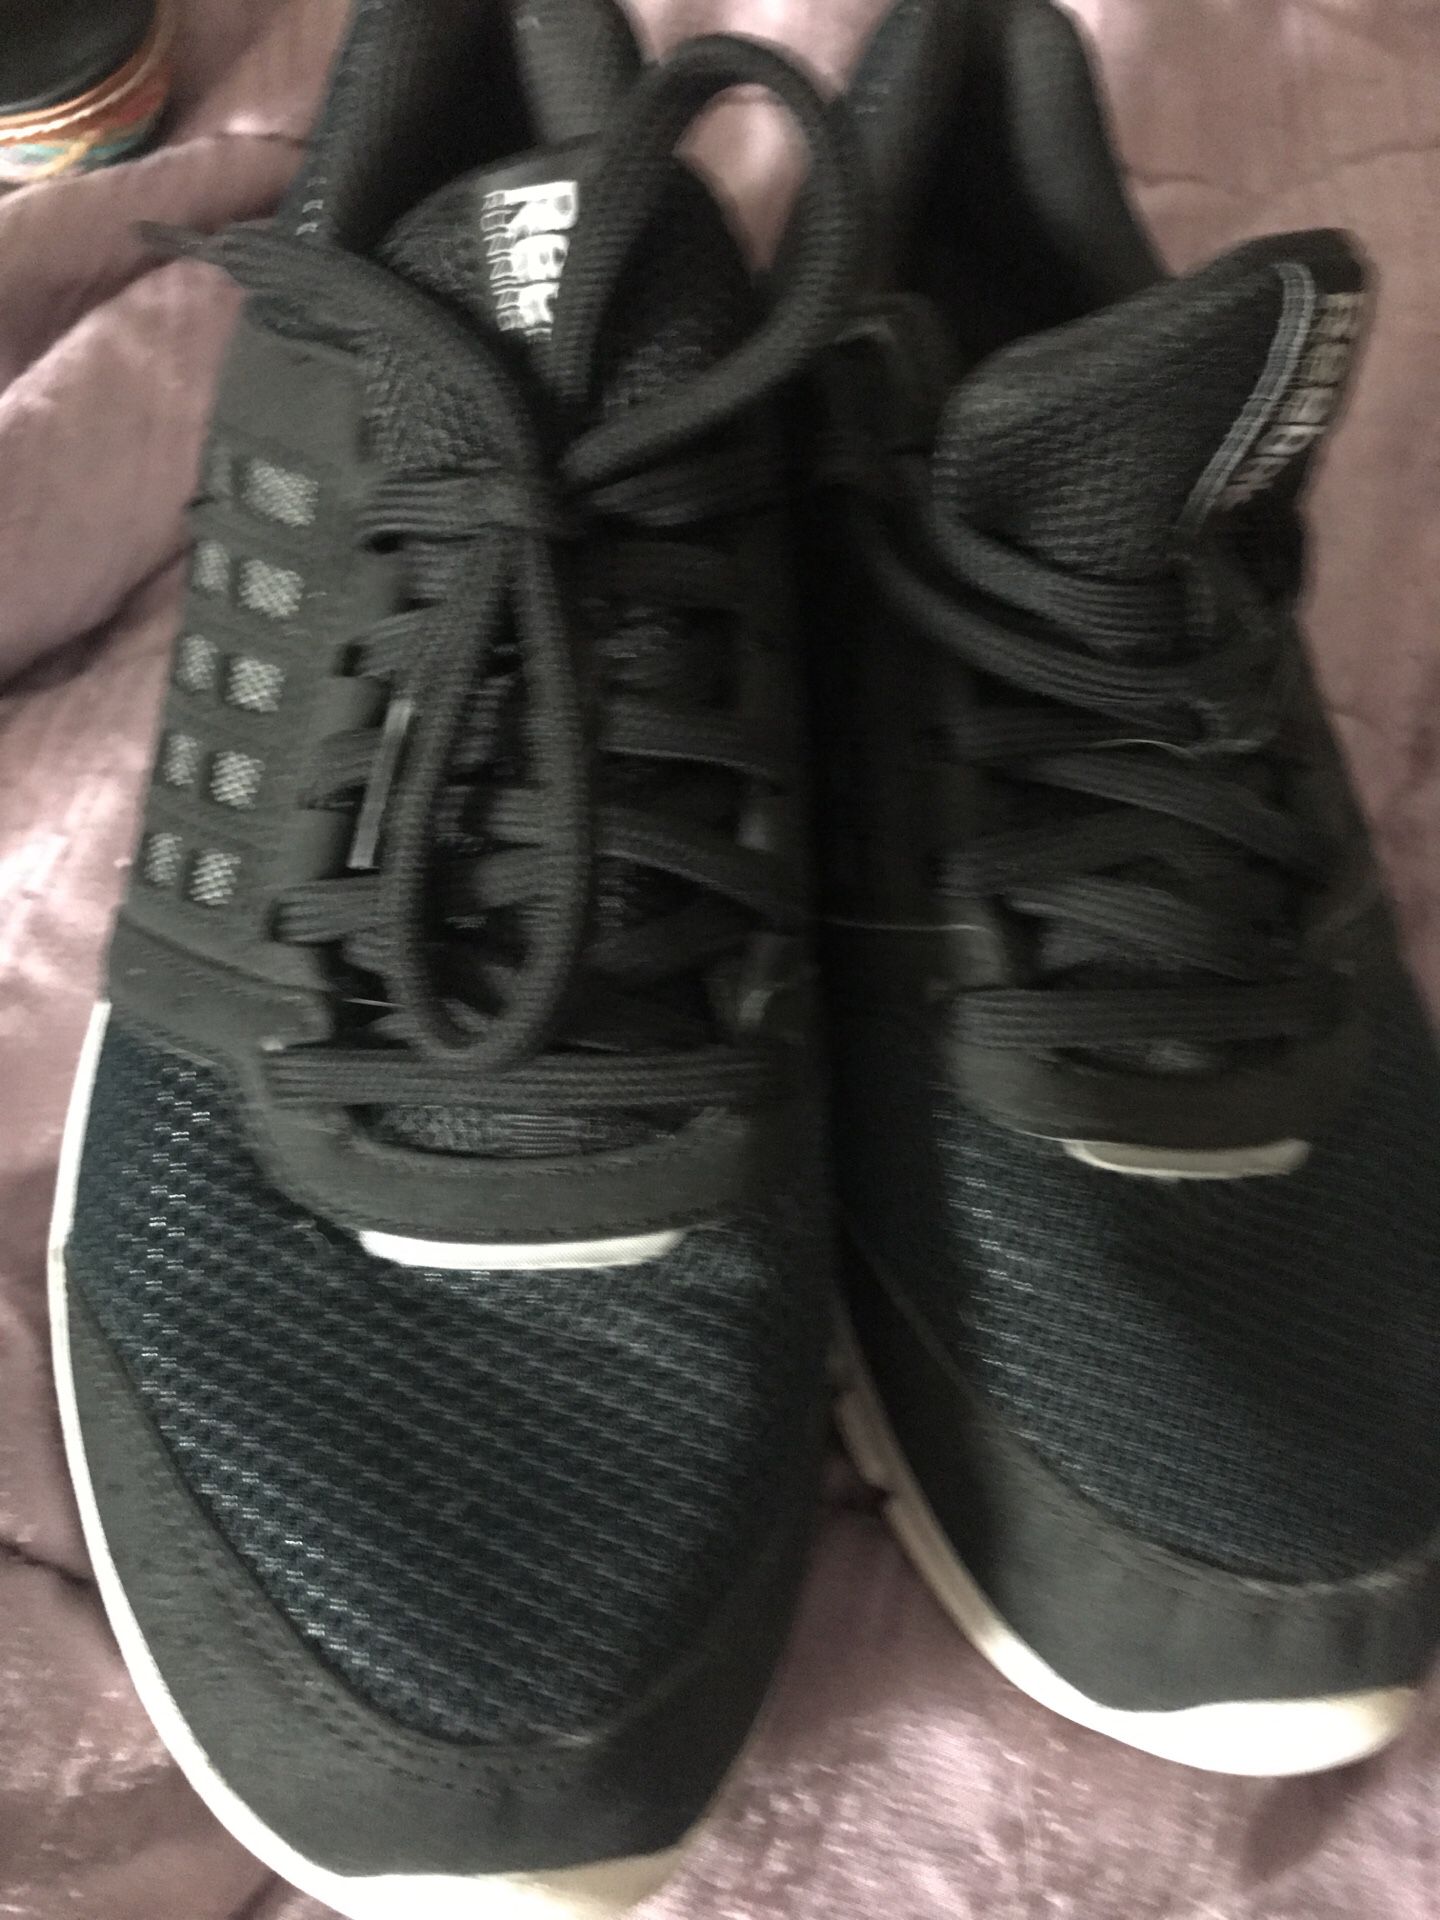 Reebok size 7 black sneakers